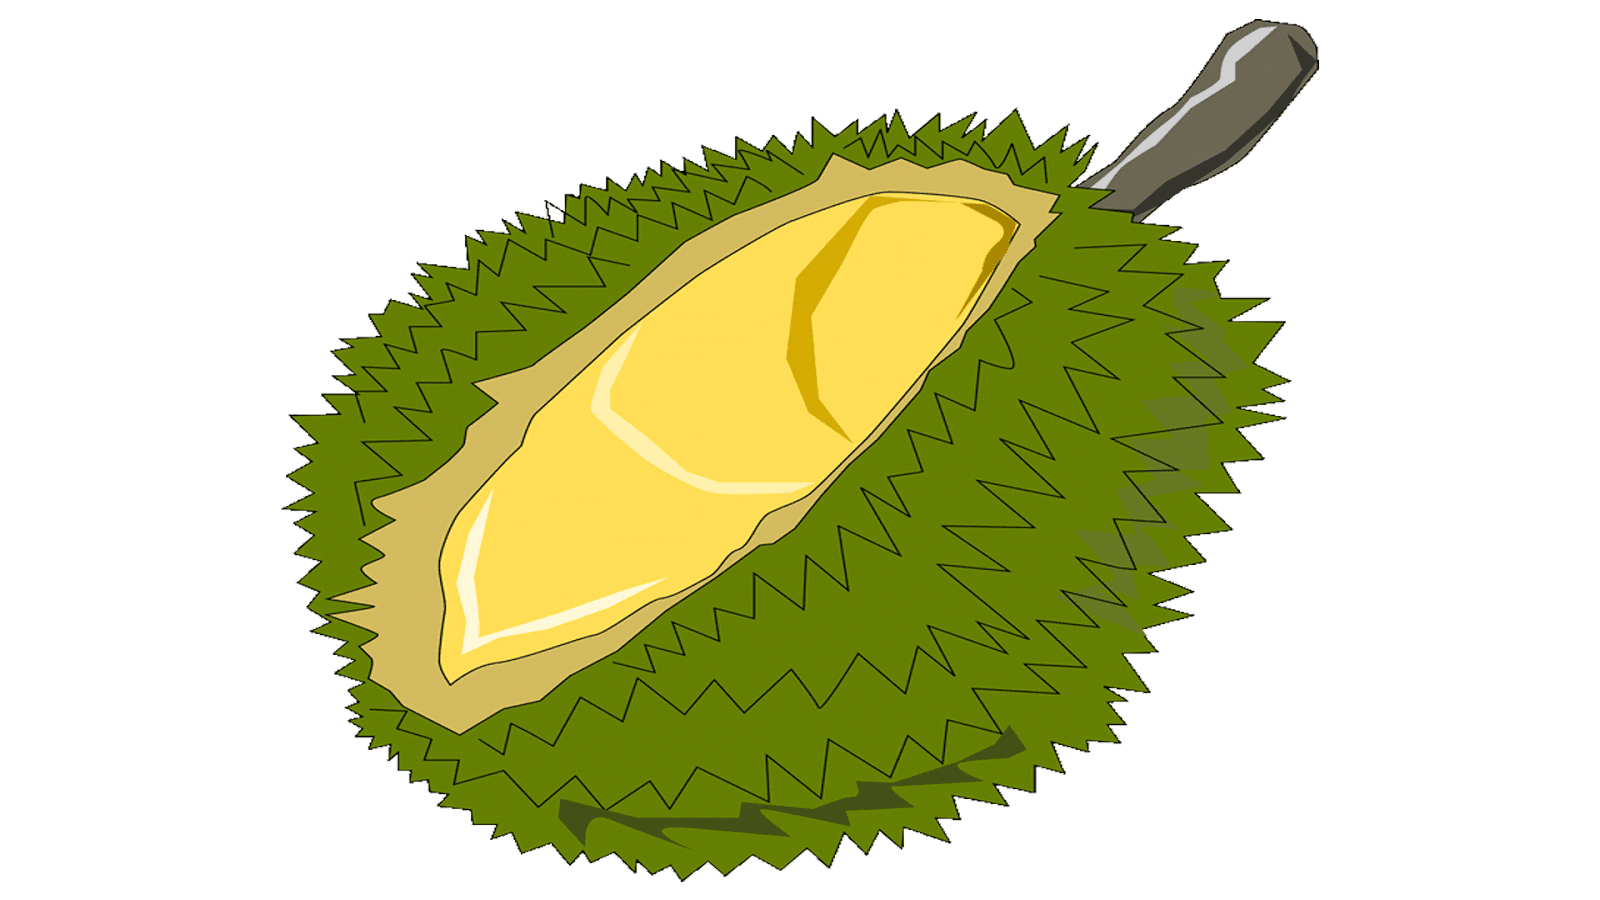 lemon clipart durian fruit